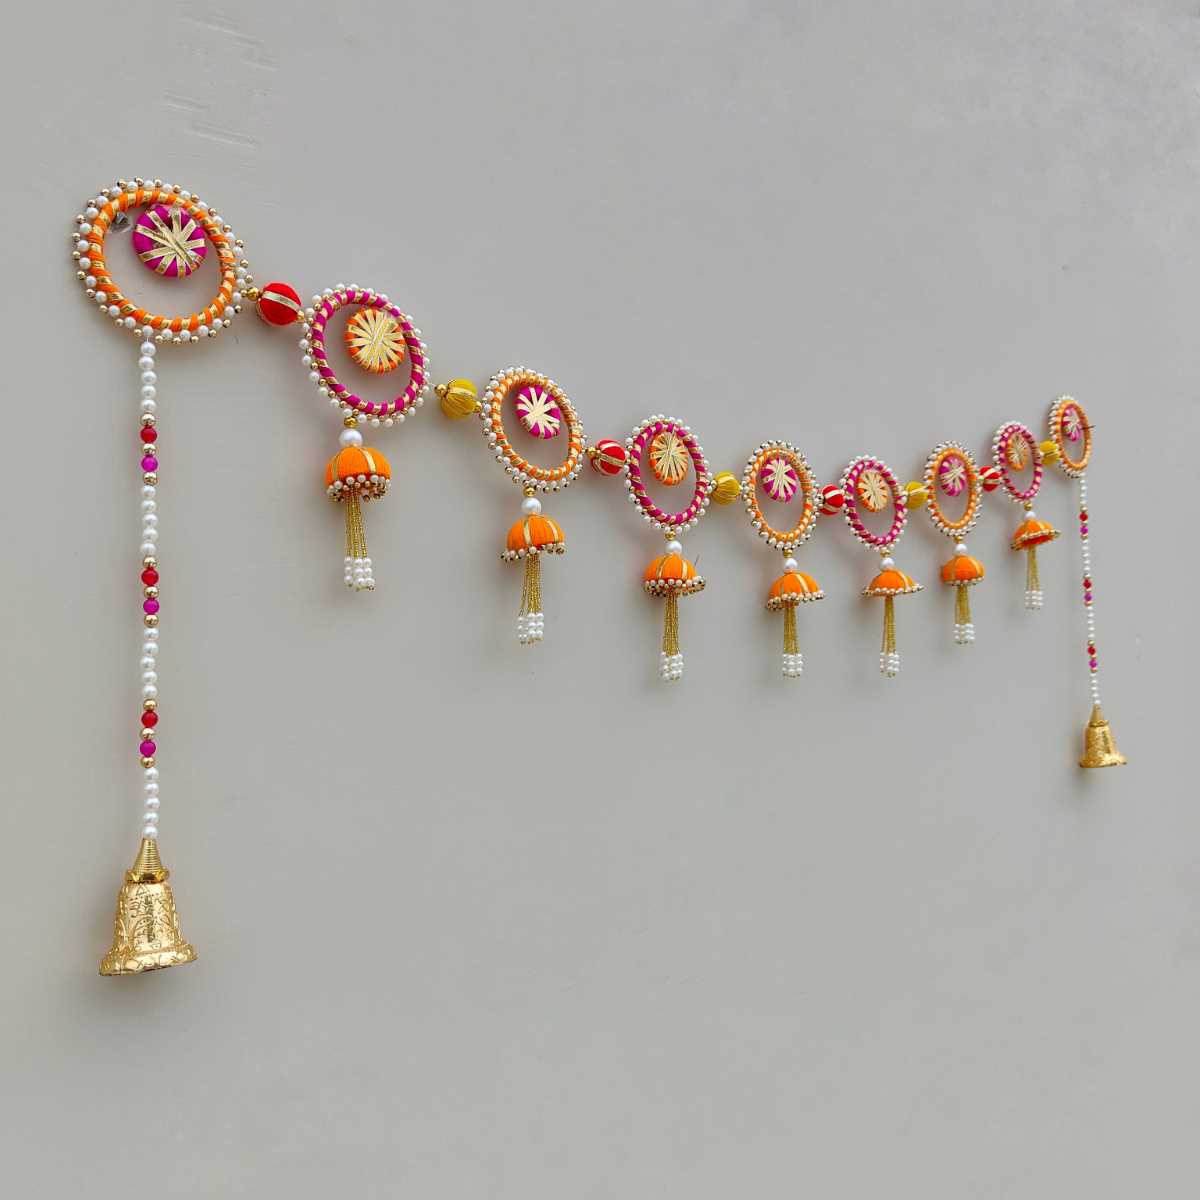 Bandhanwars/floral bandhanwar/designer bandhanwar | Diwali craft, Diy  diwali decorations, Flower crafts